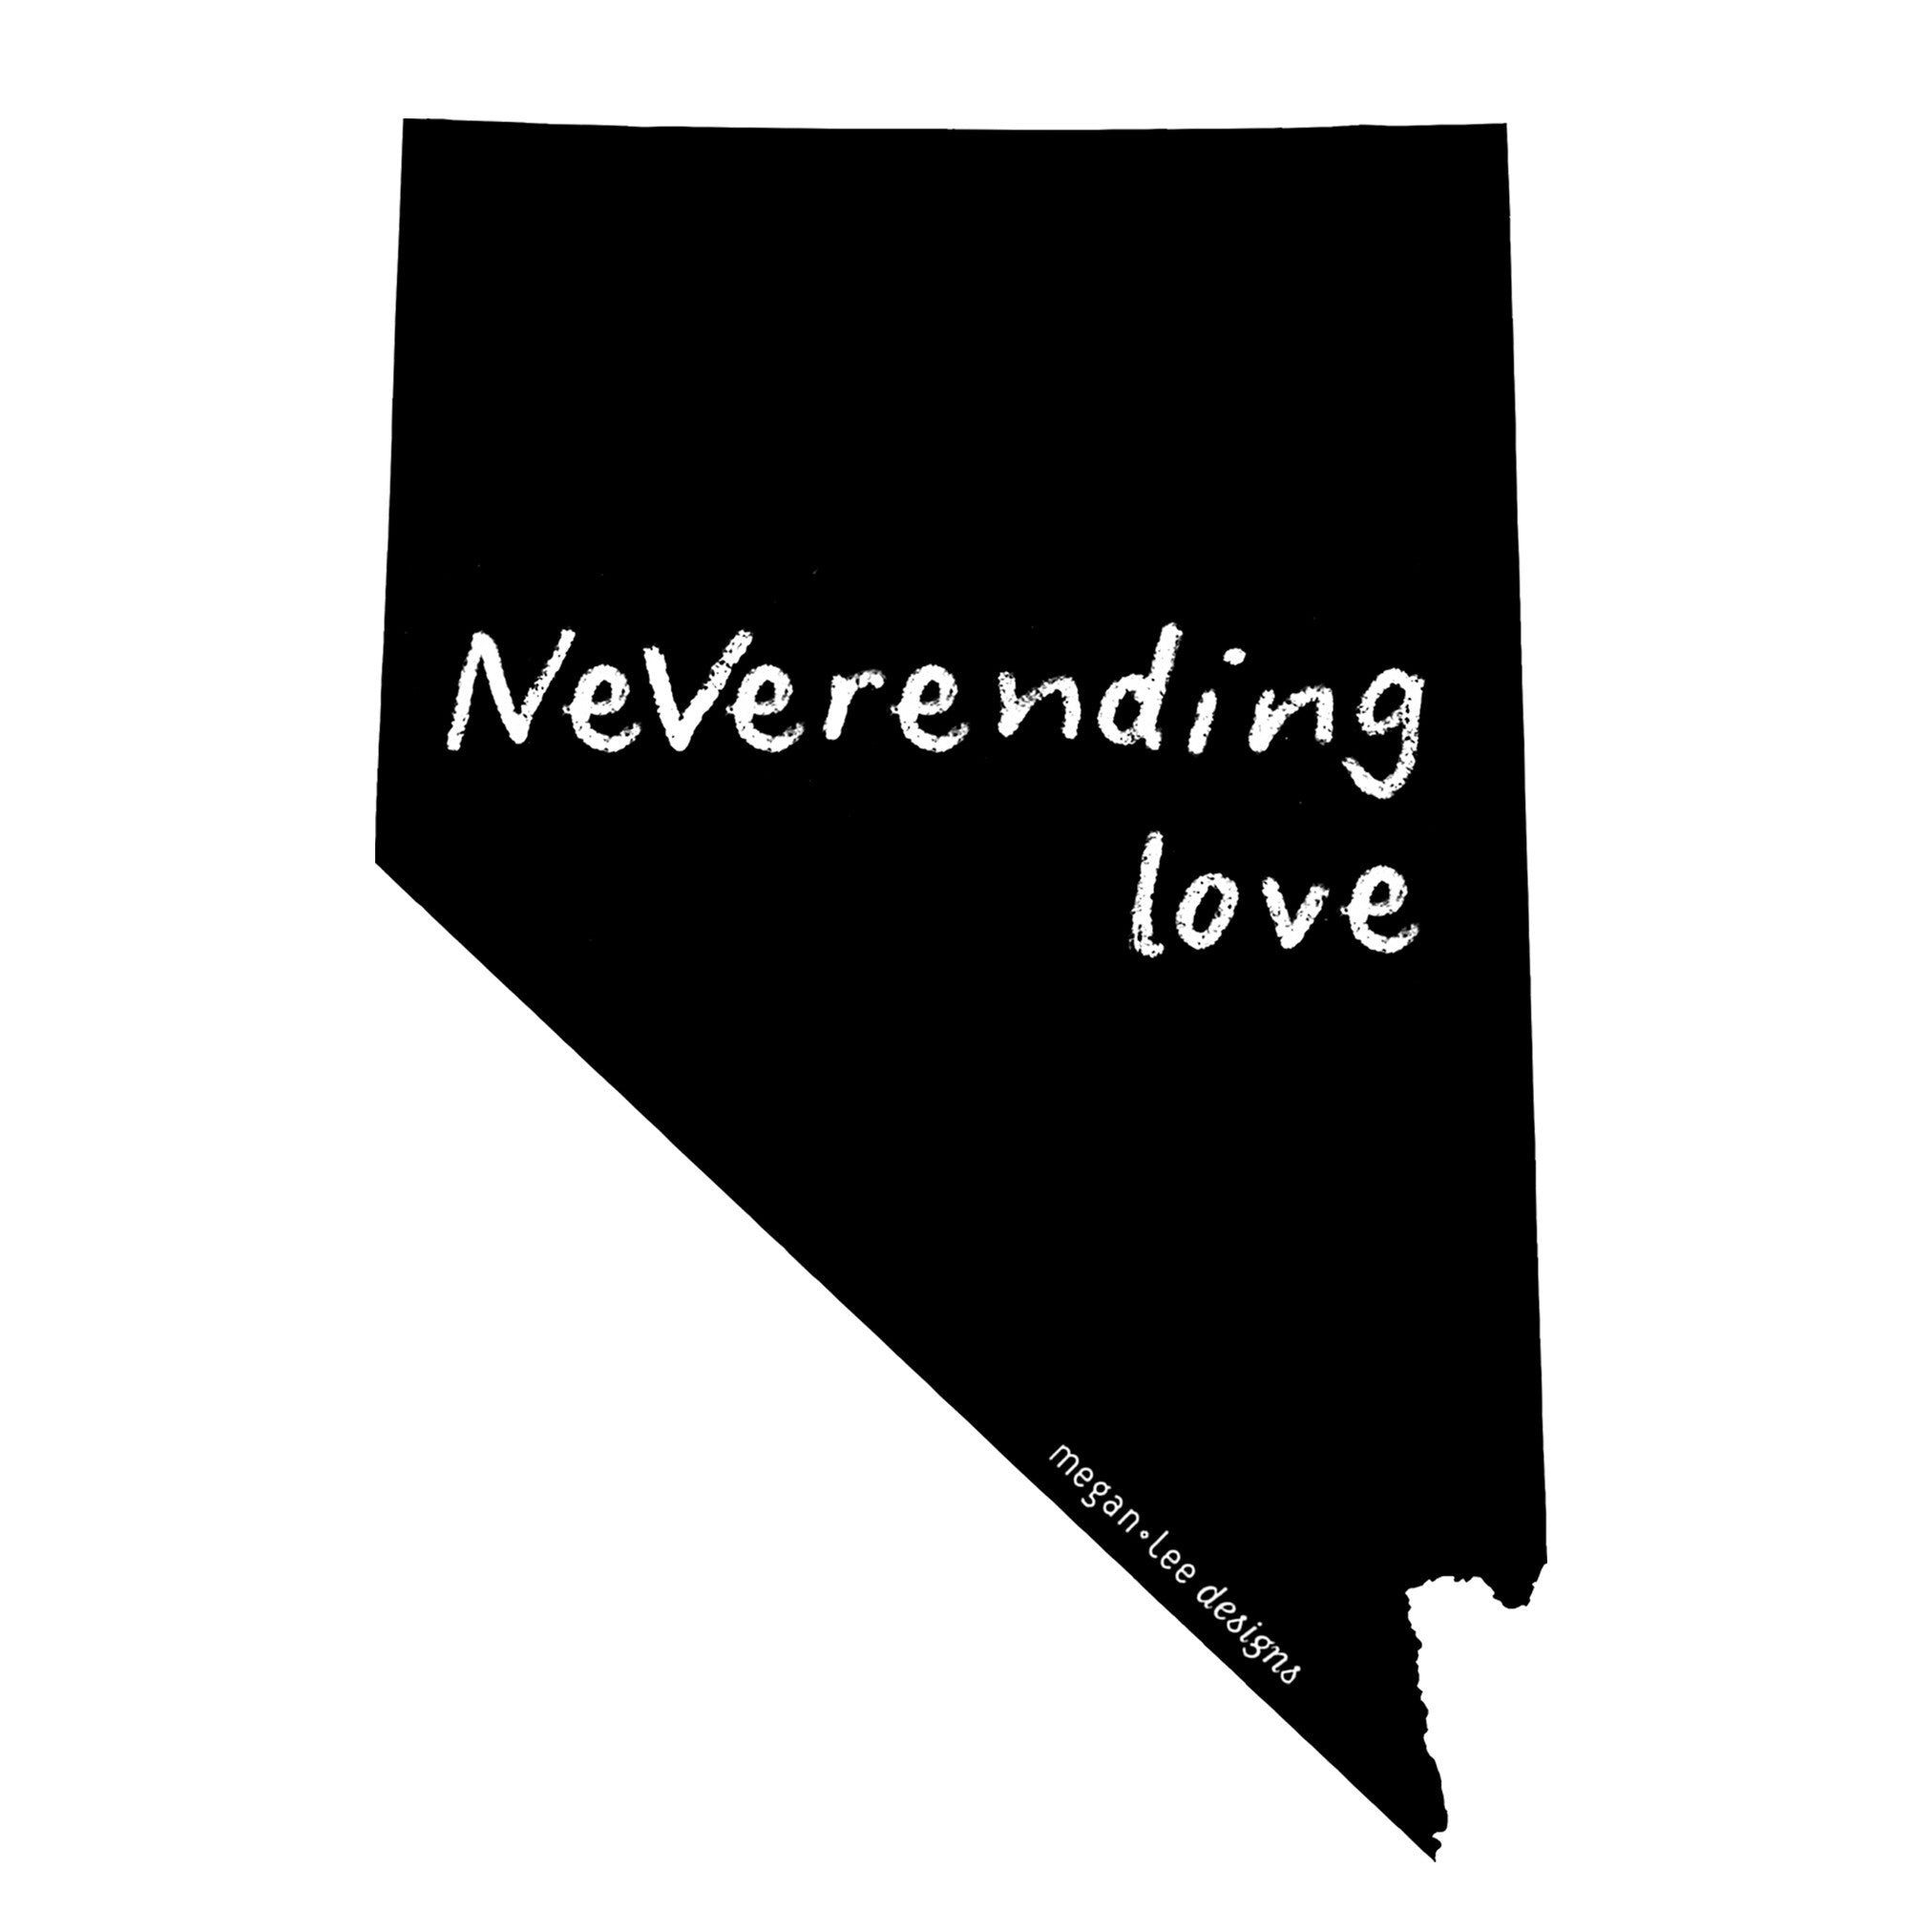 Nevada : NeVerending love bodysuit (white), Baby Apparel - Megan Lee Designs